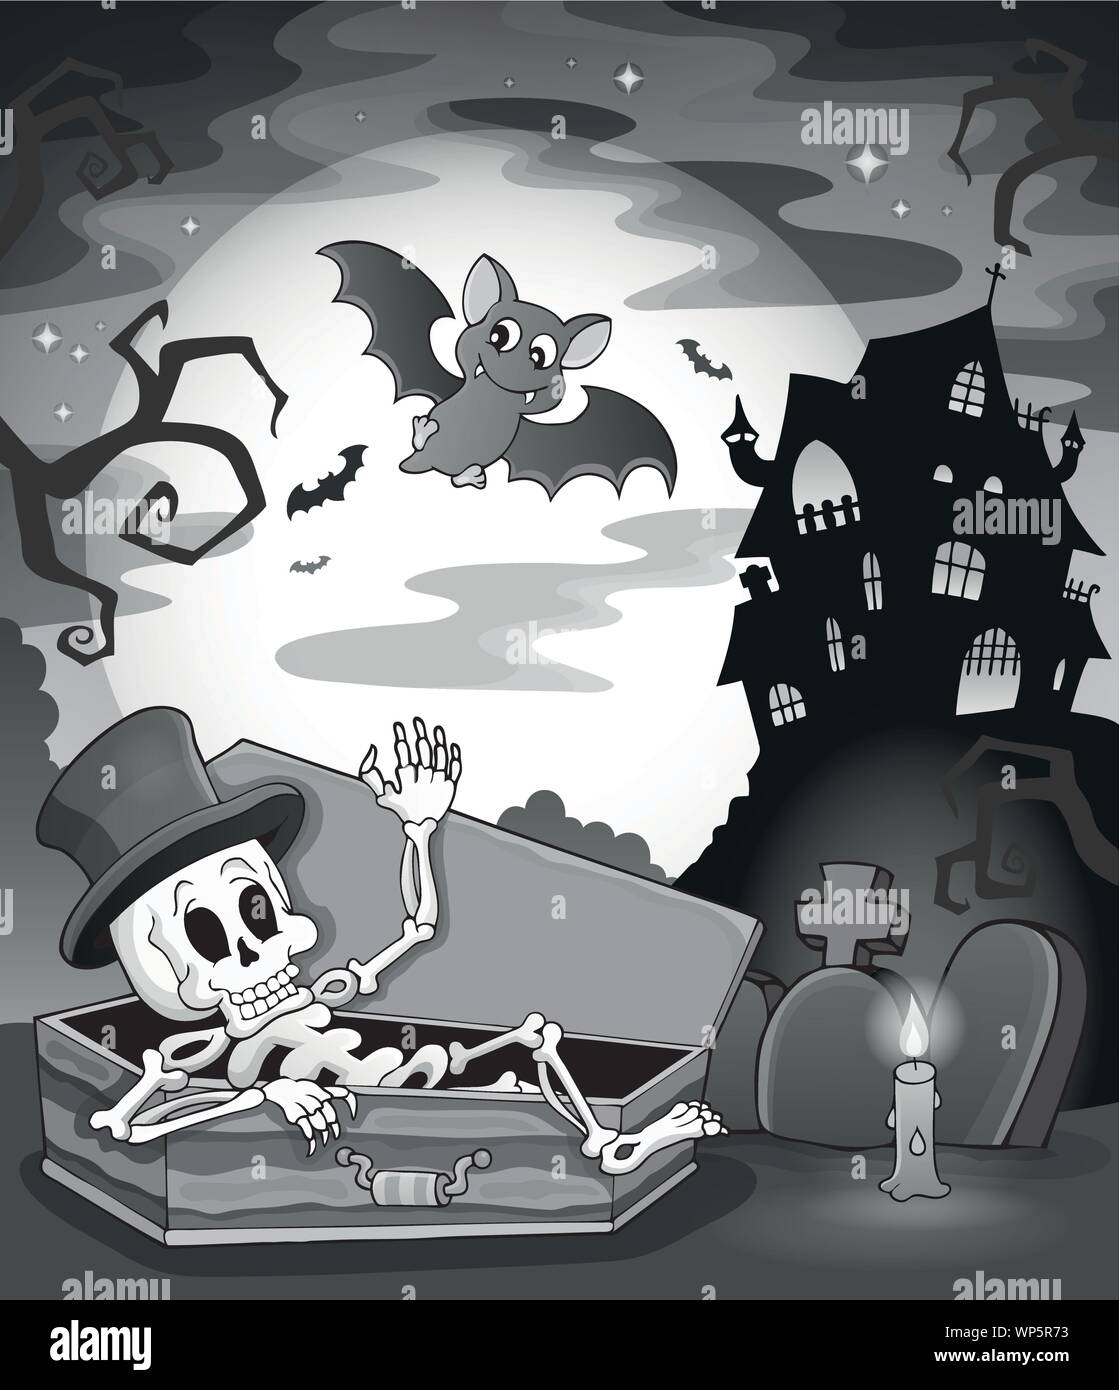 Black and white skeleton theme image Stock Vector